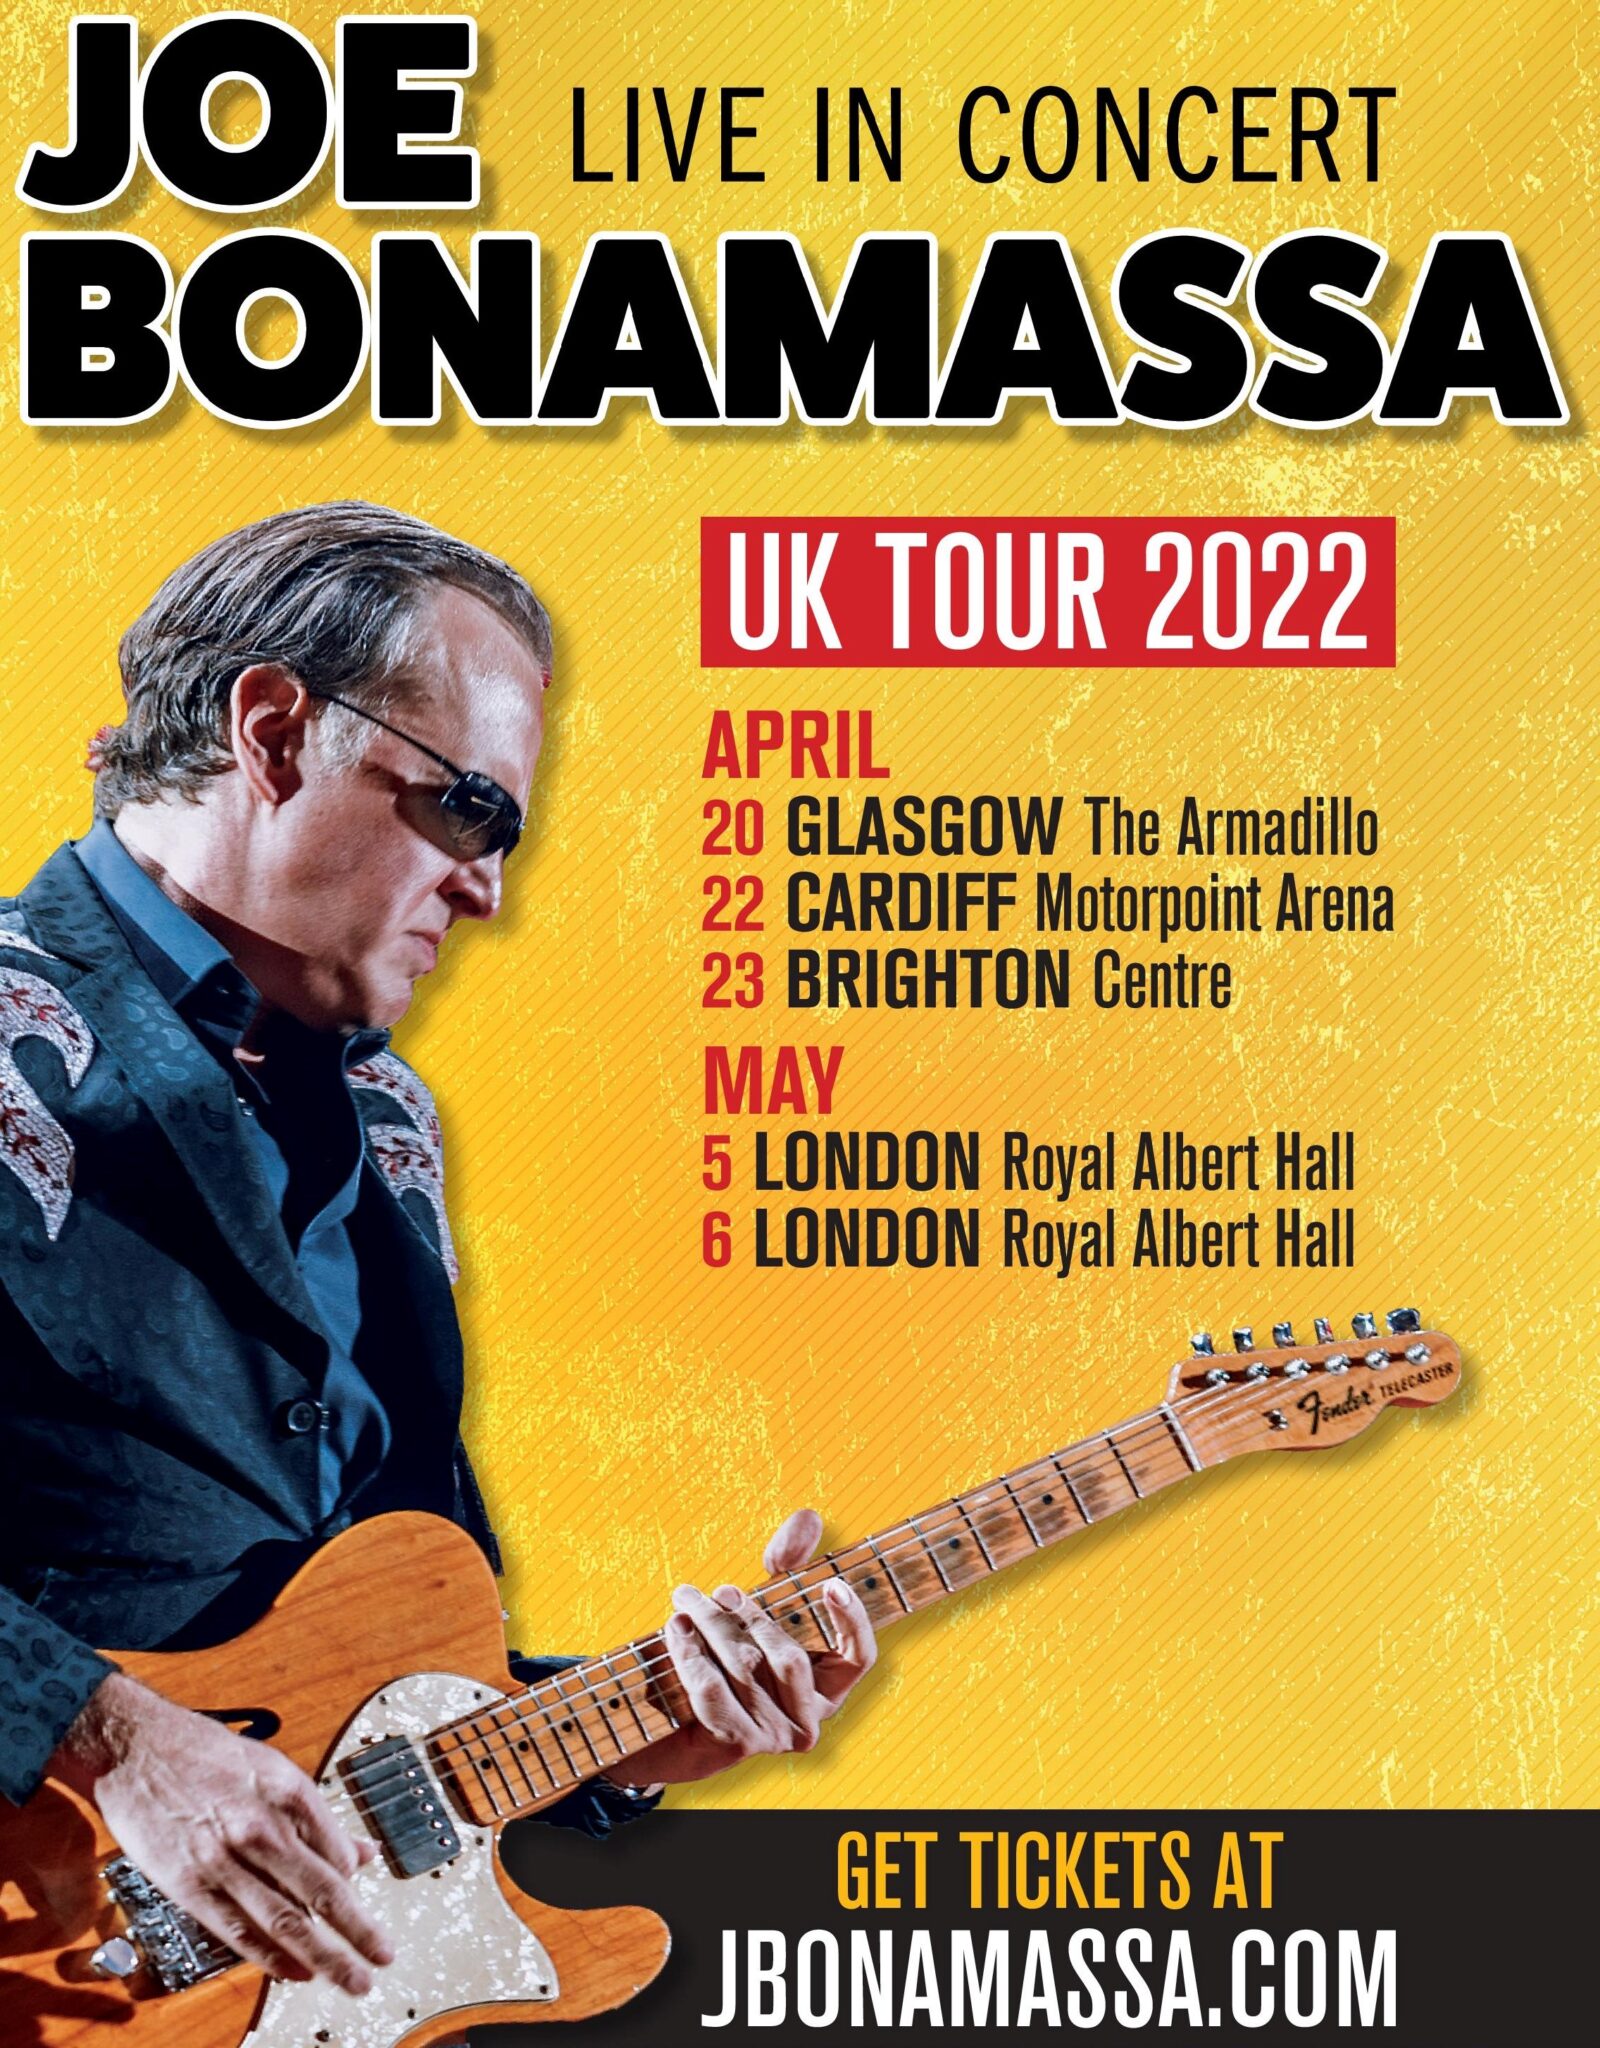 Joe Bonamassa Tours The UK In 2022 • TotalRock